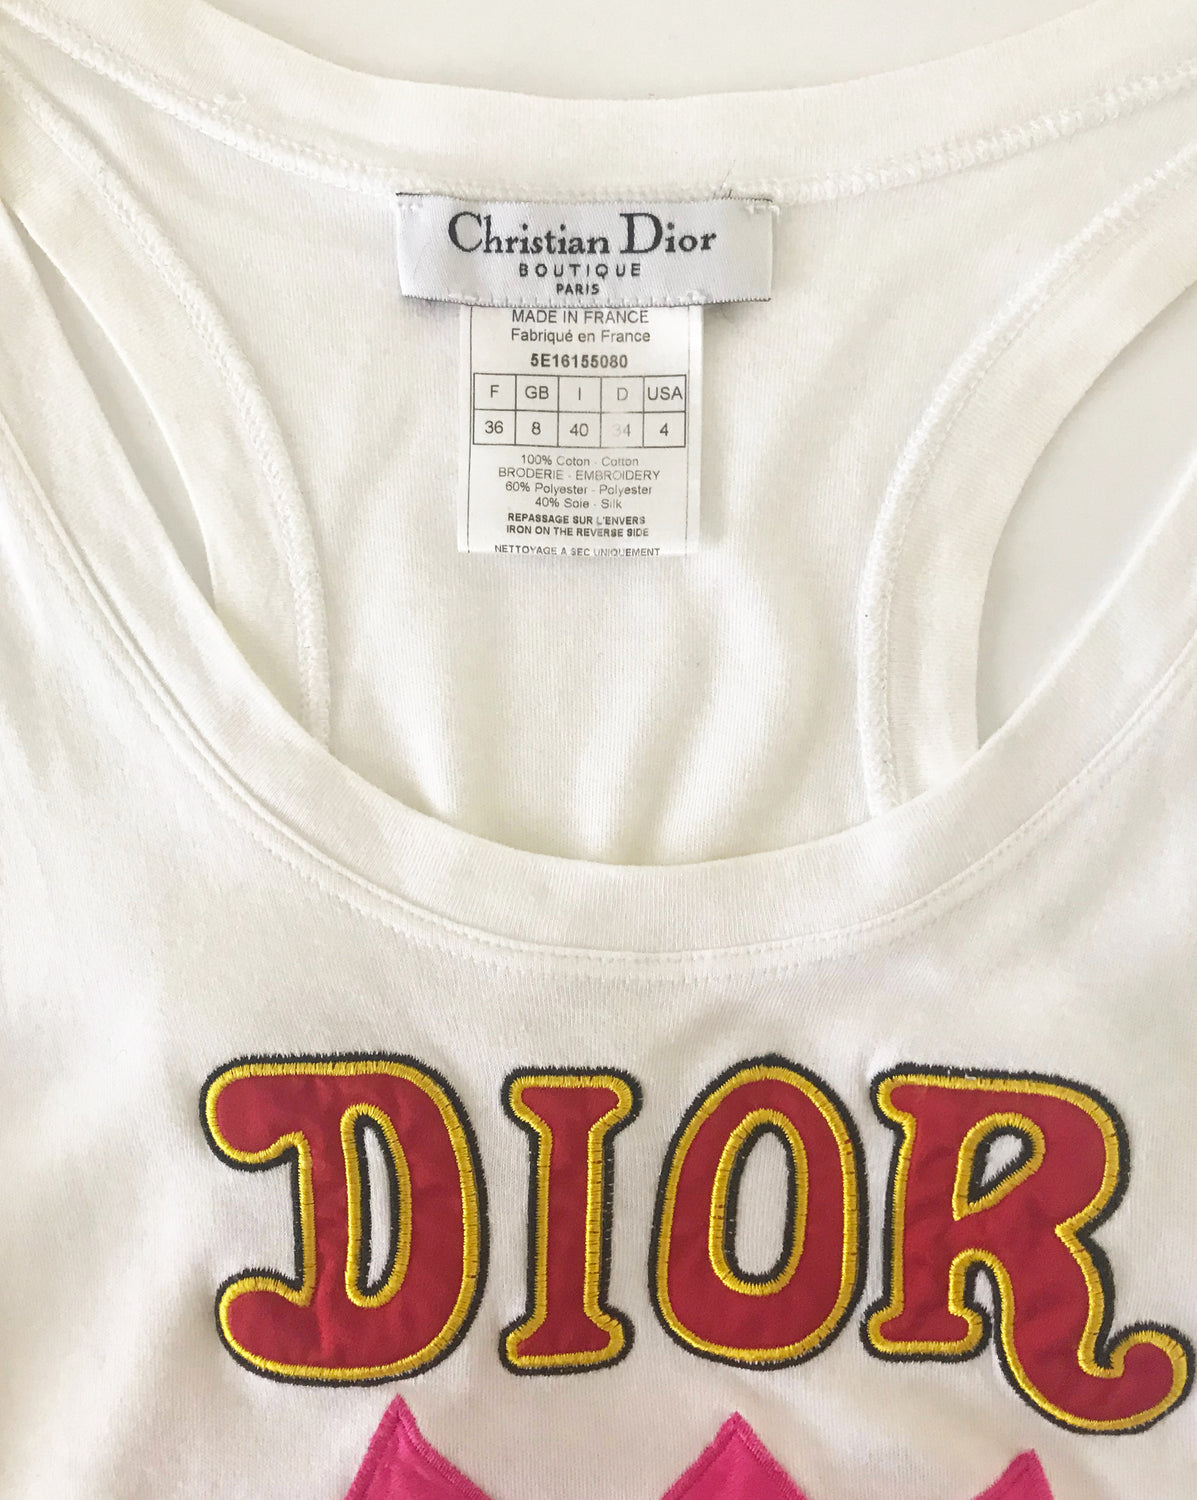 Fruit Vintage Christian Dior 'Dior Not War' Tank top by John Galliano